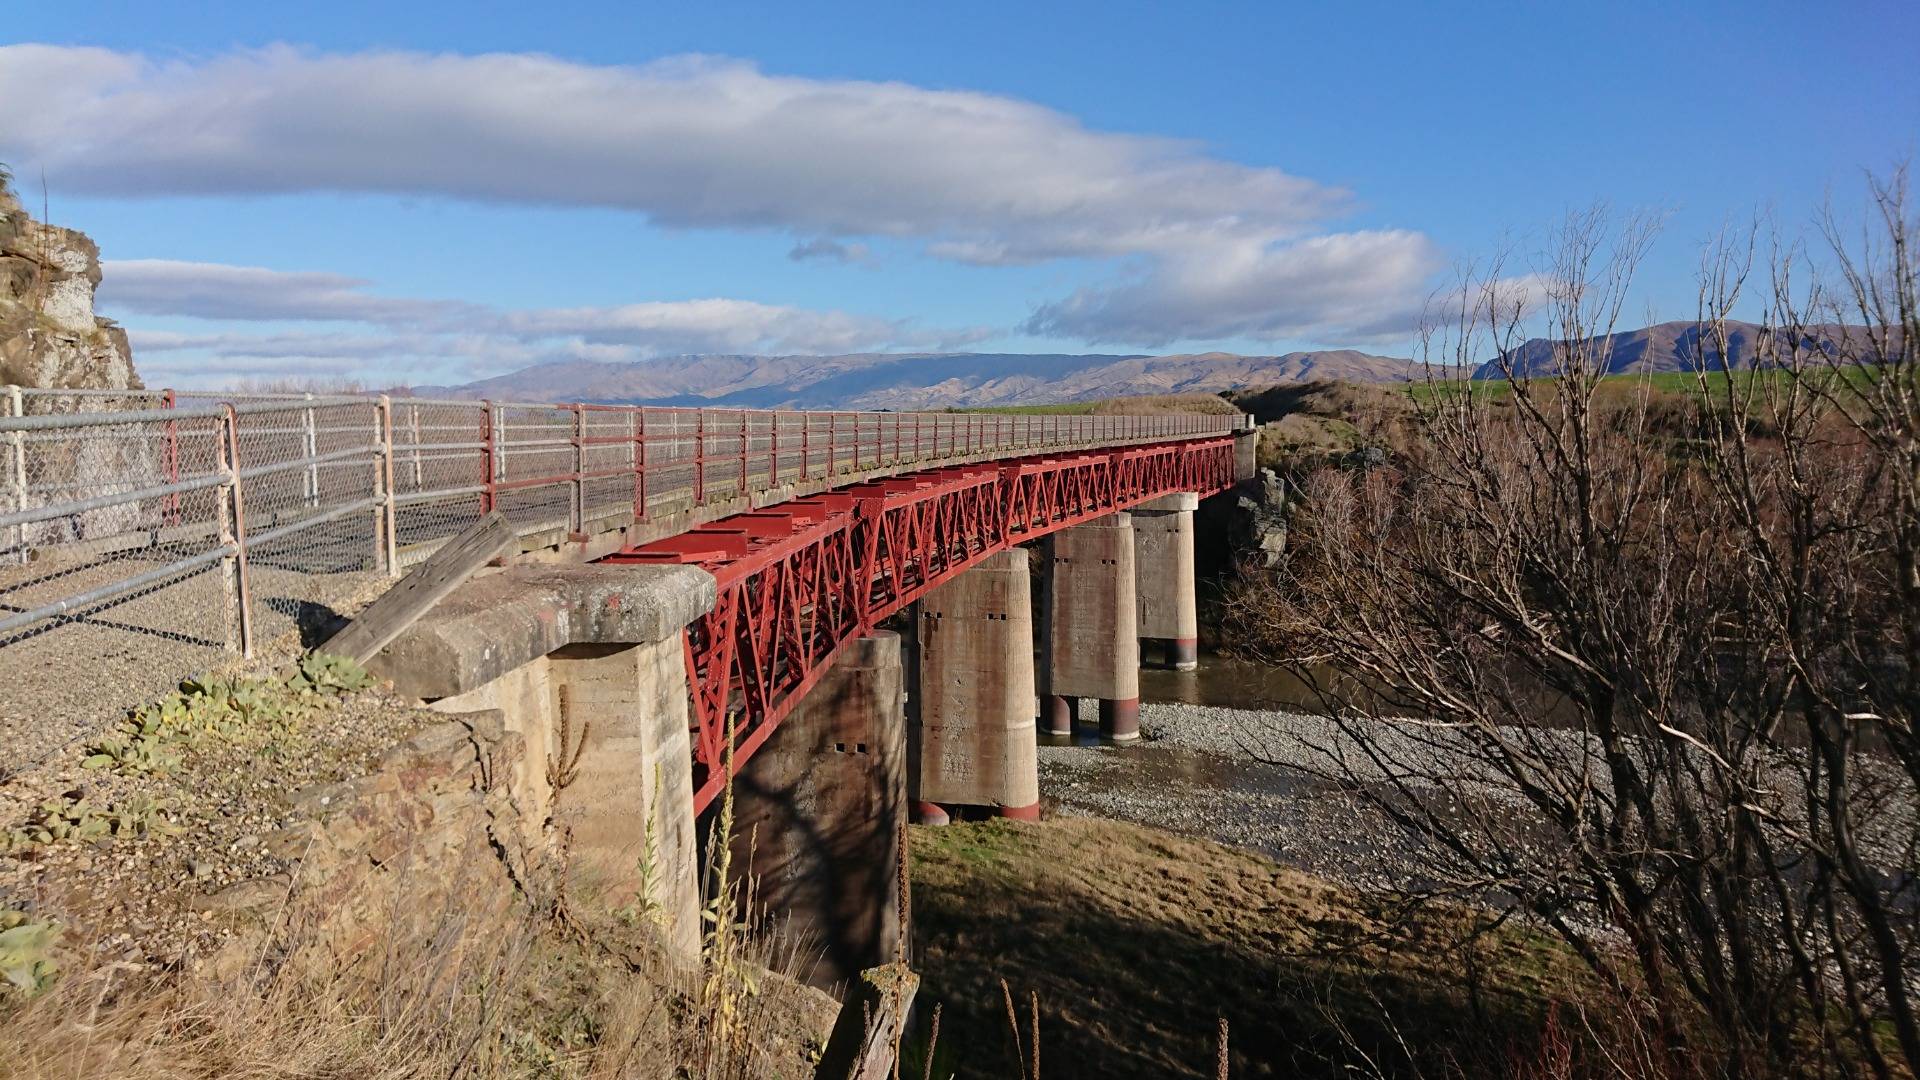 The "Manuherikia No. 1 Bridge"